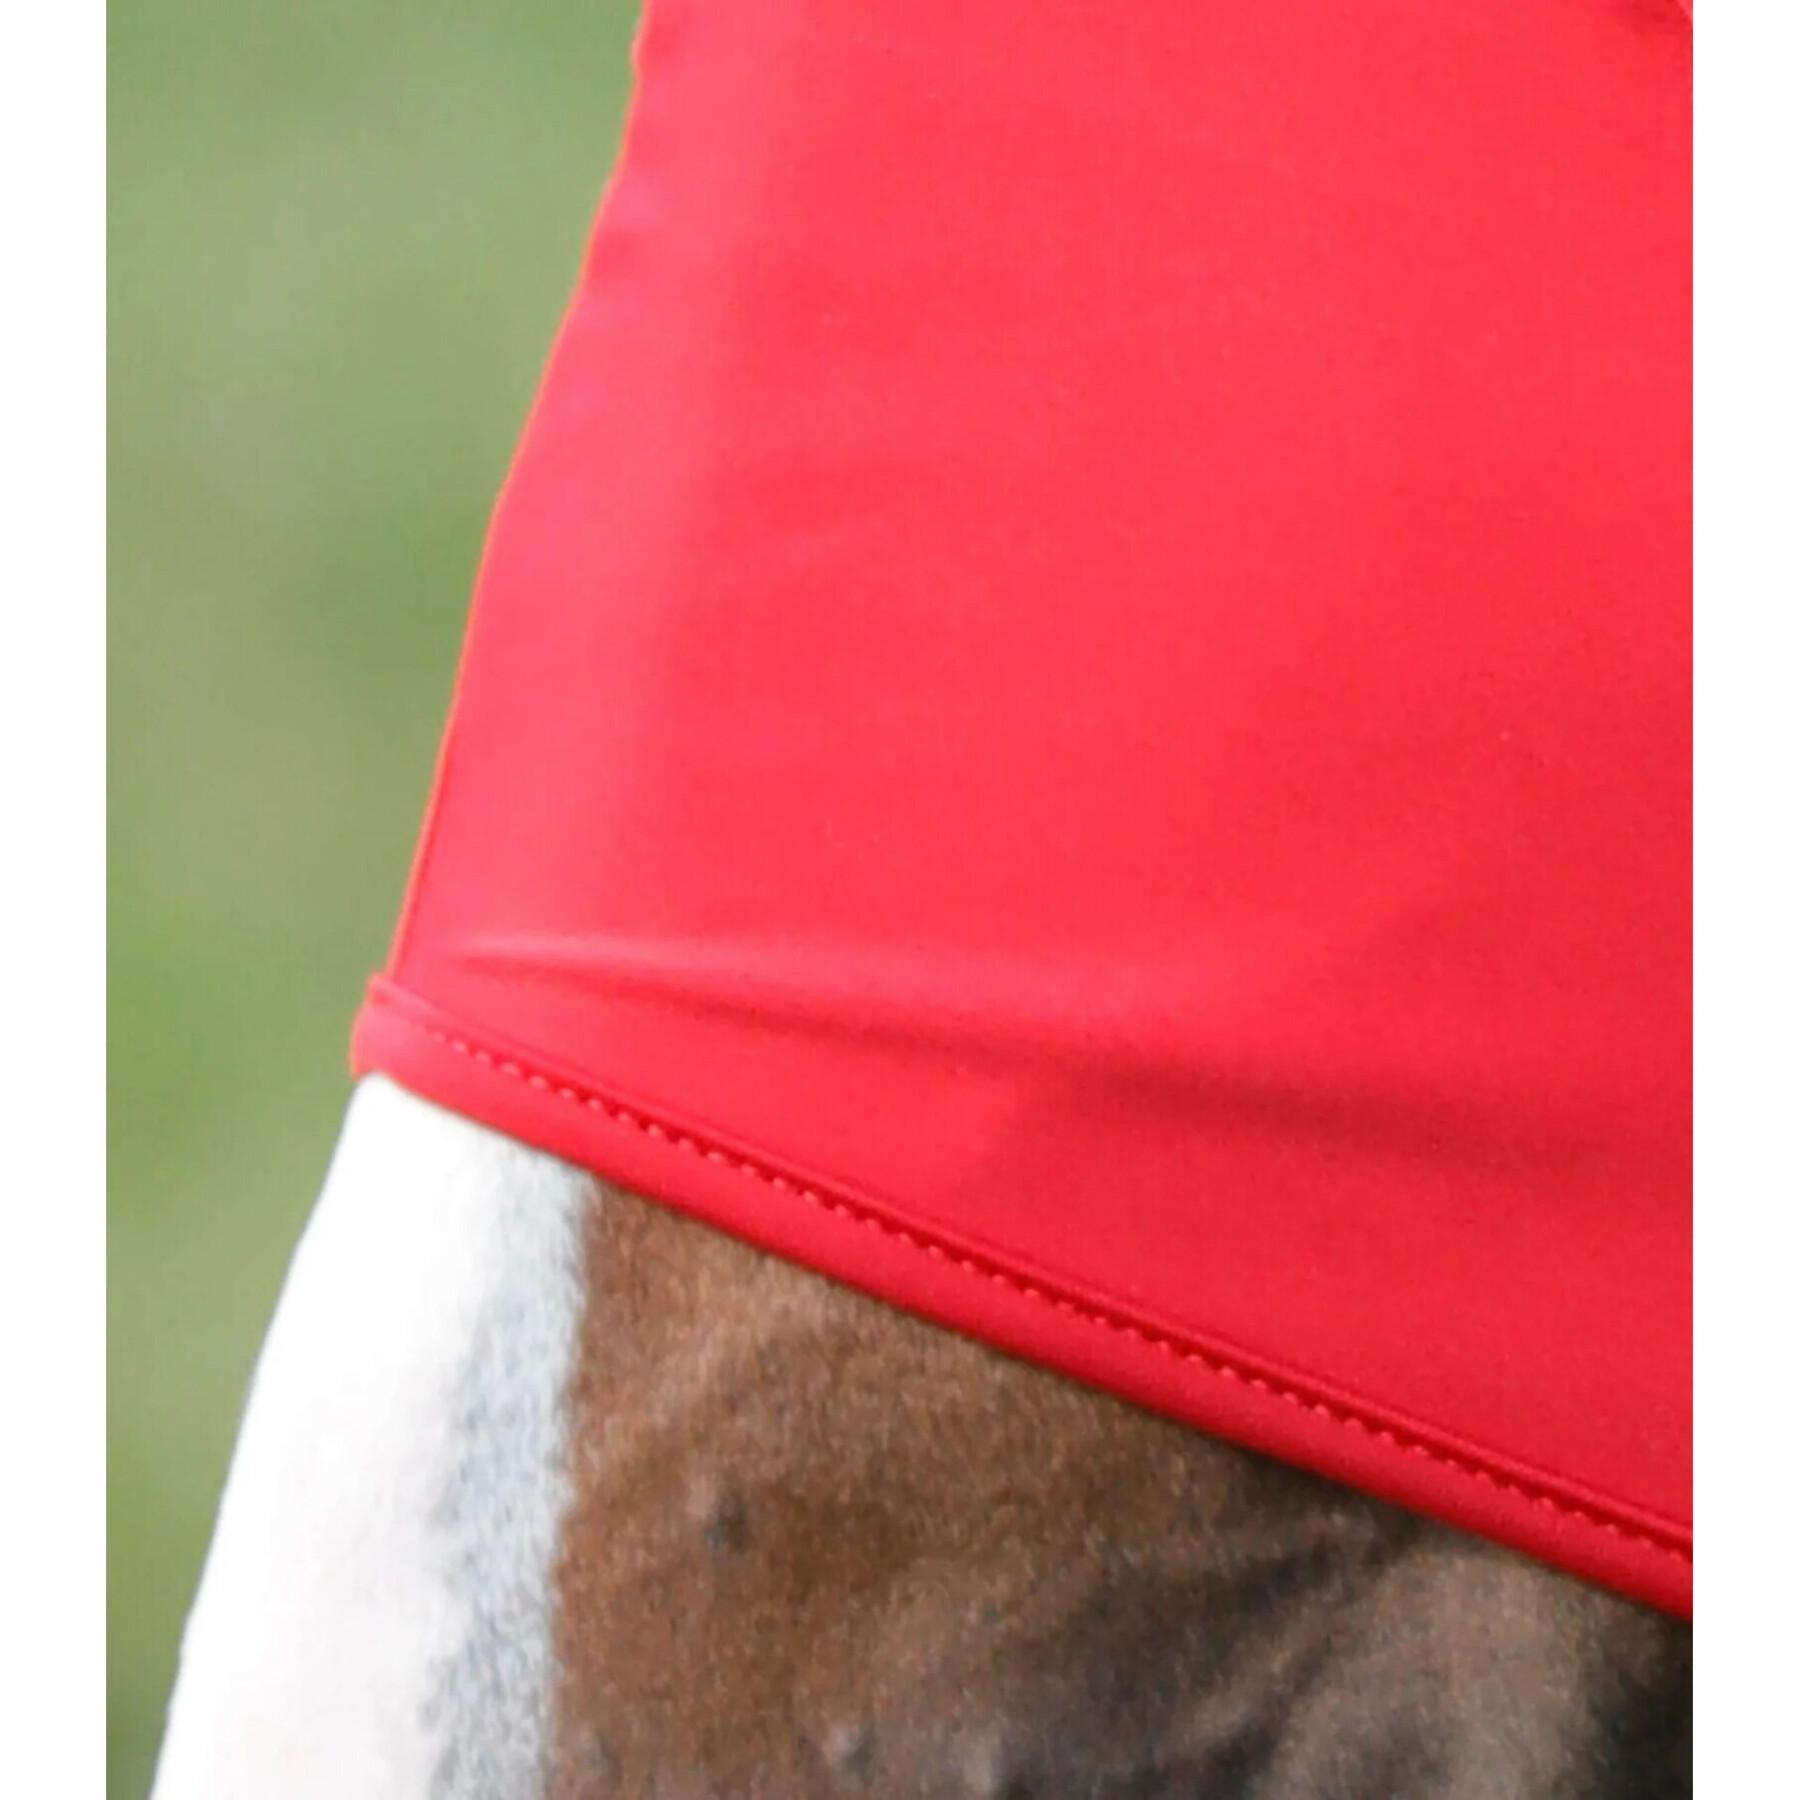 Maschera antimosche per cavalli Premier Equine Comfort Tech Lycra